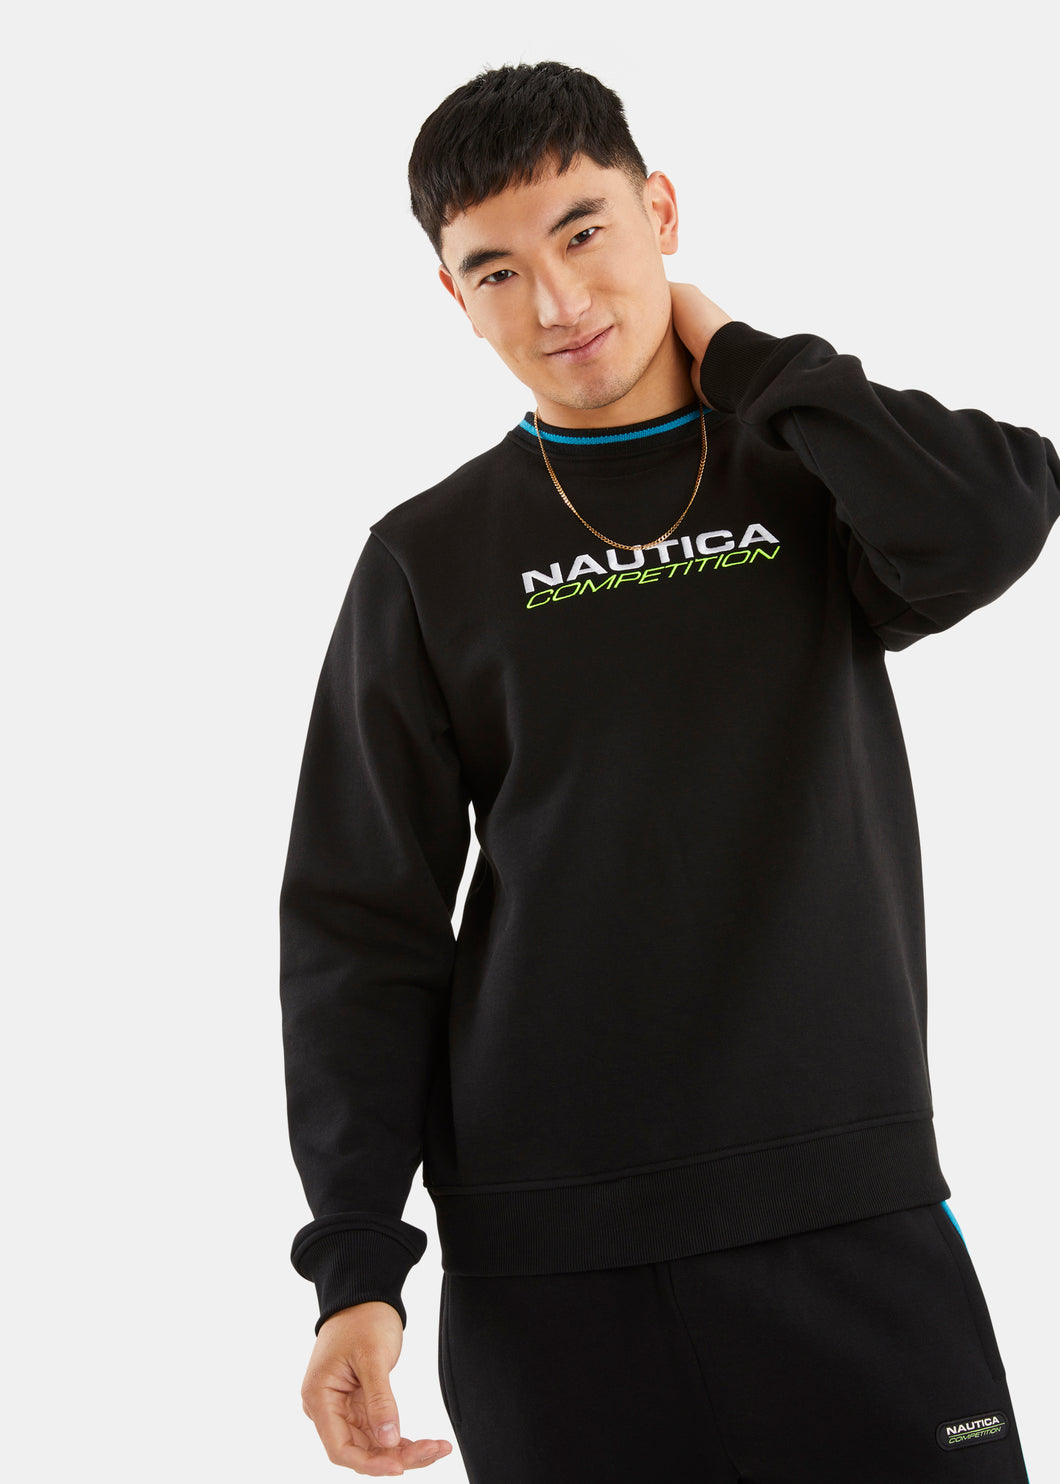 Nautica Competition Crocker Sweatshirt - Black - Front 